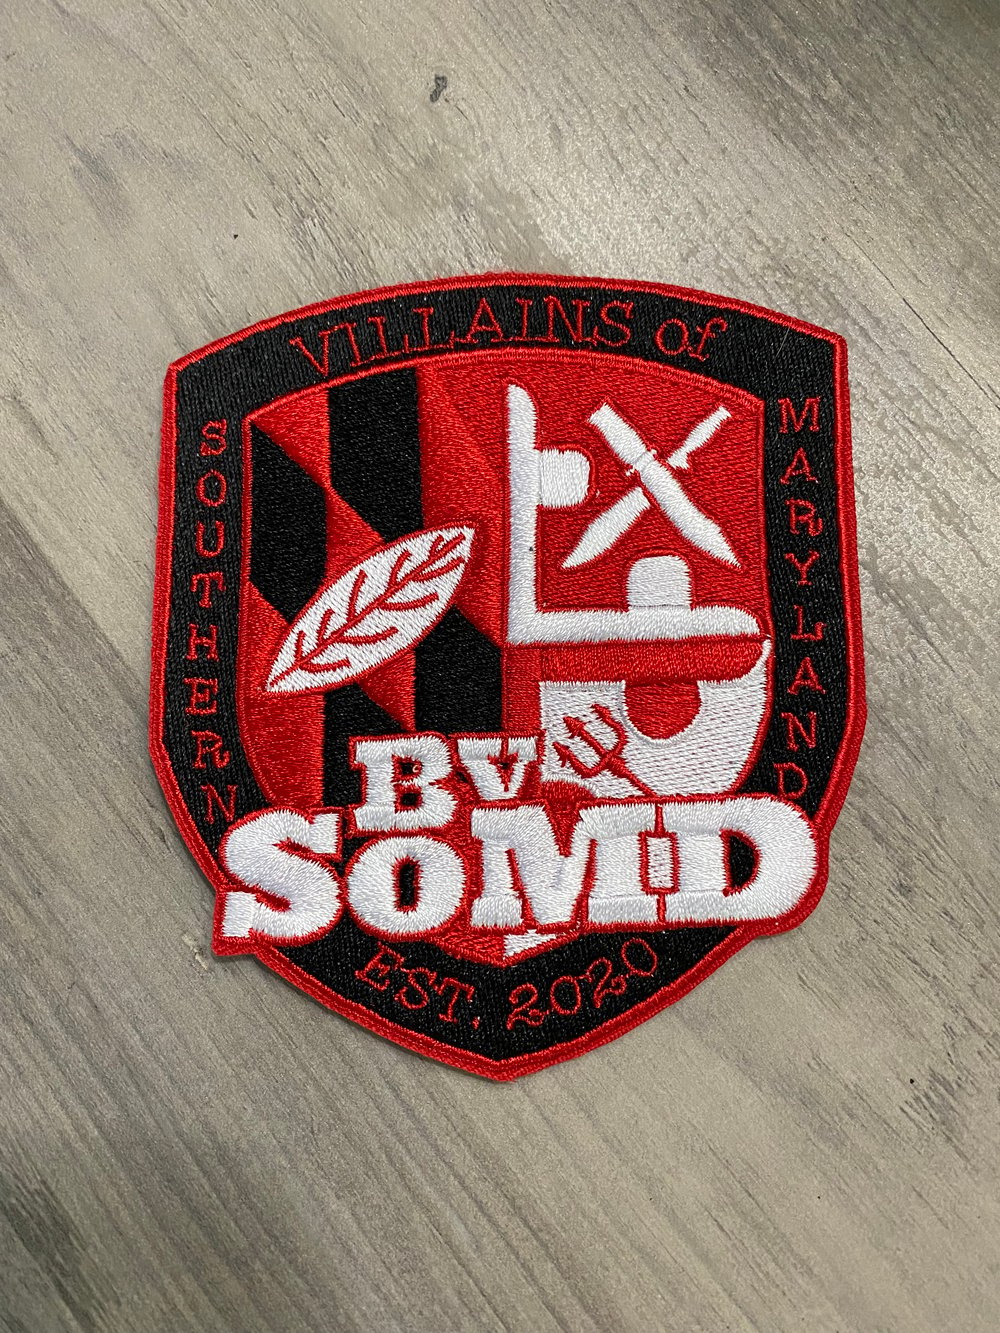 2 Year Anniversary BVSoMD Red Shield 